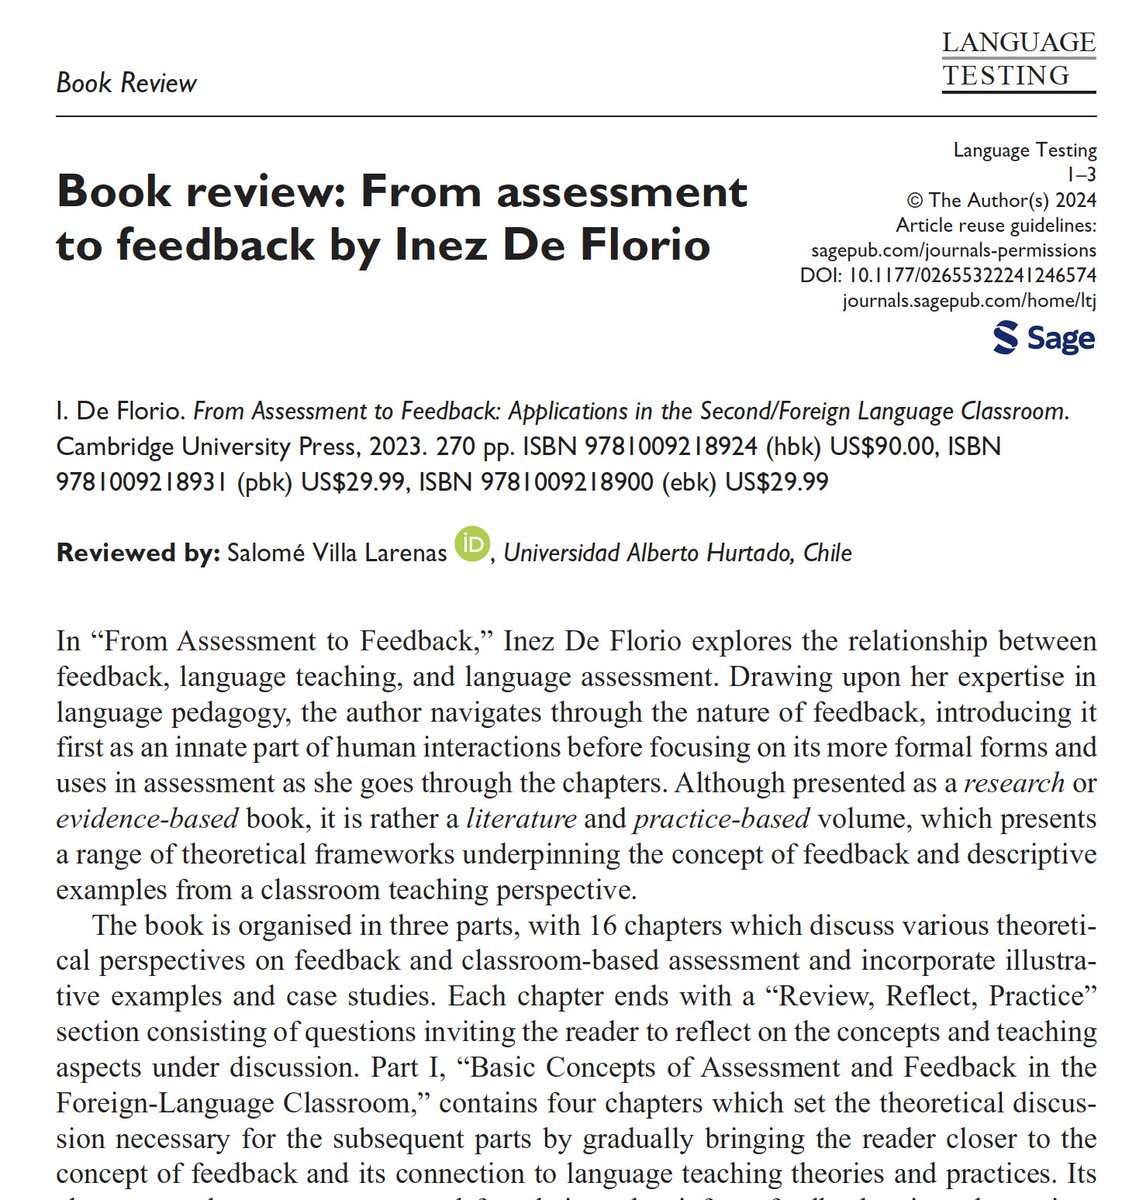 Now available in Online First, Salomé Villa Larenas (@uahurtado) reviews From Assessment to Feedback by Inez De Florio. journals.sagepub.com/doi/10.1177/02…